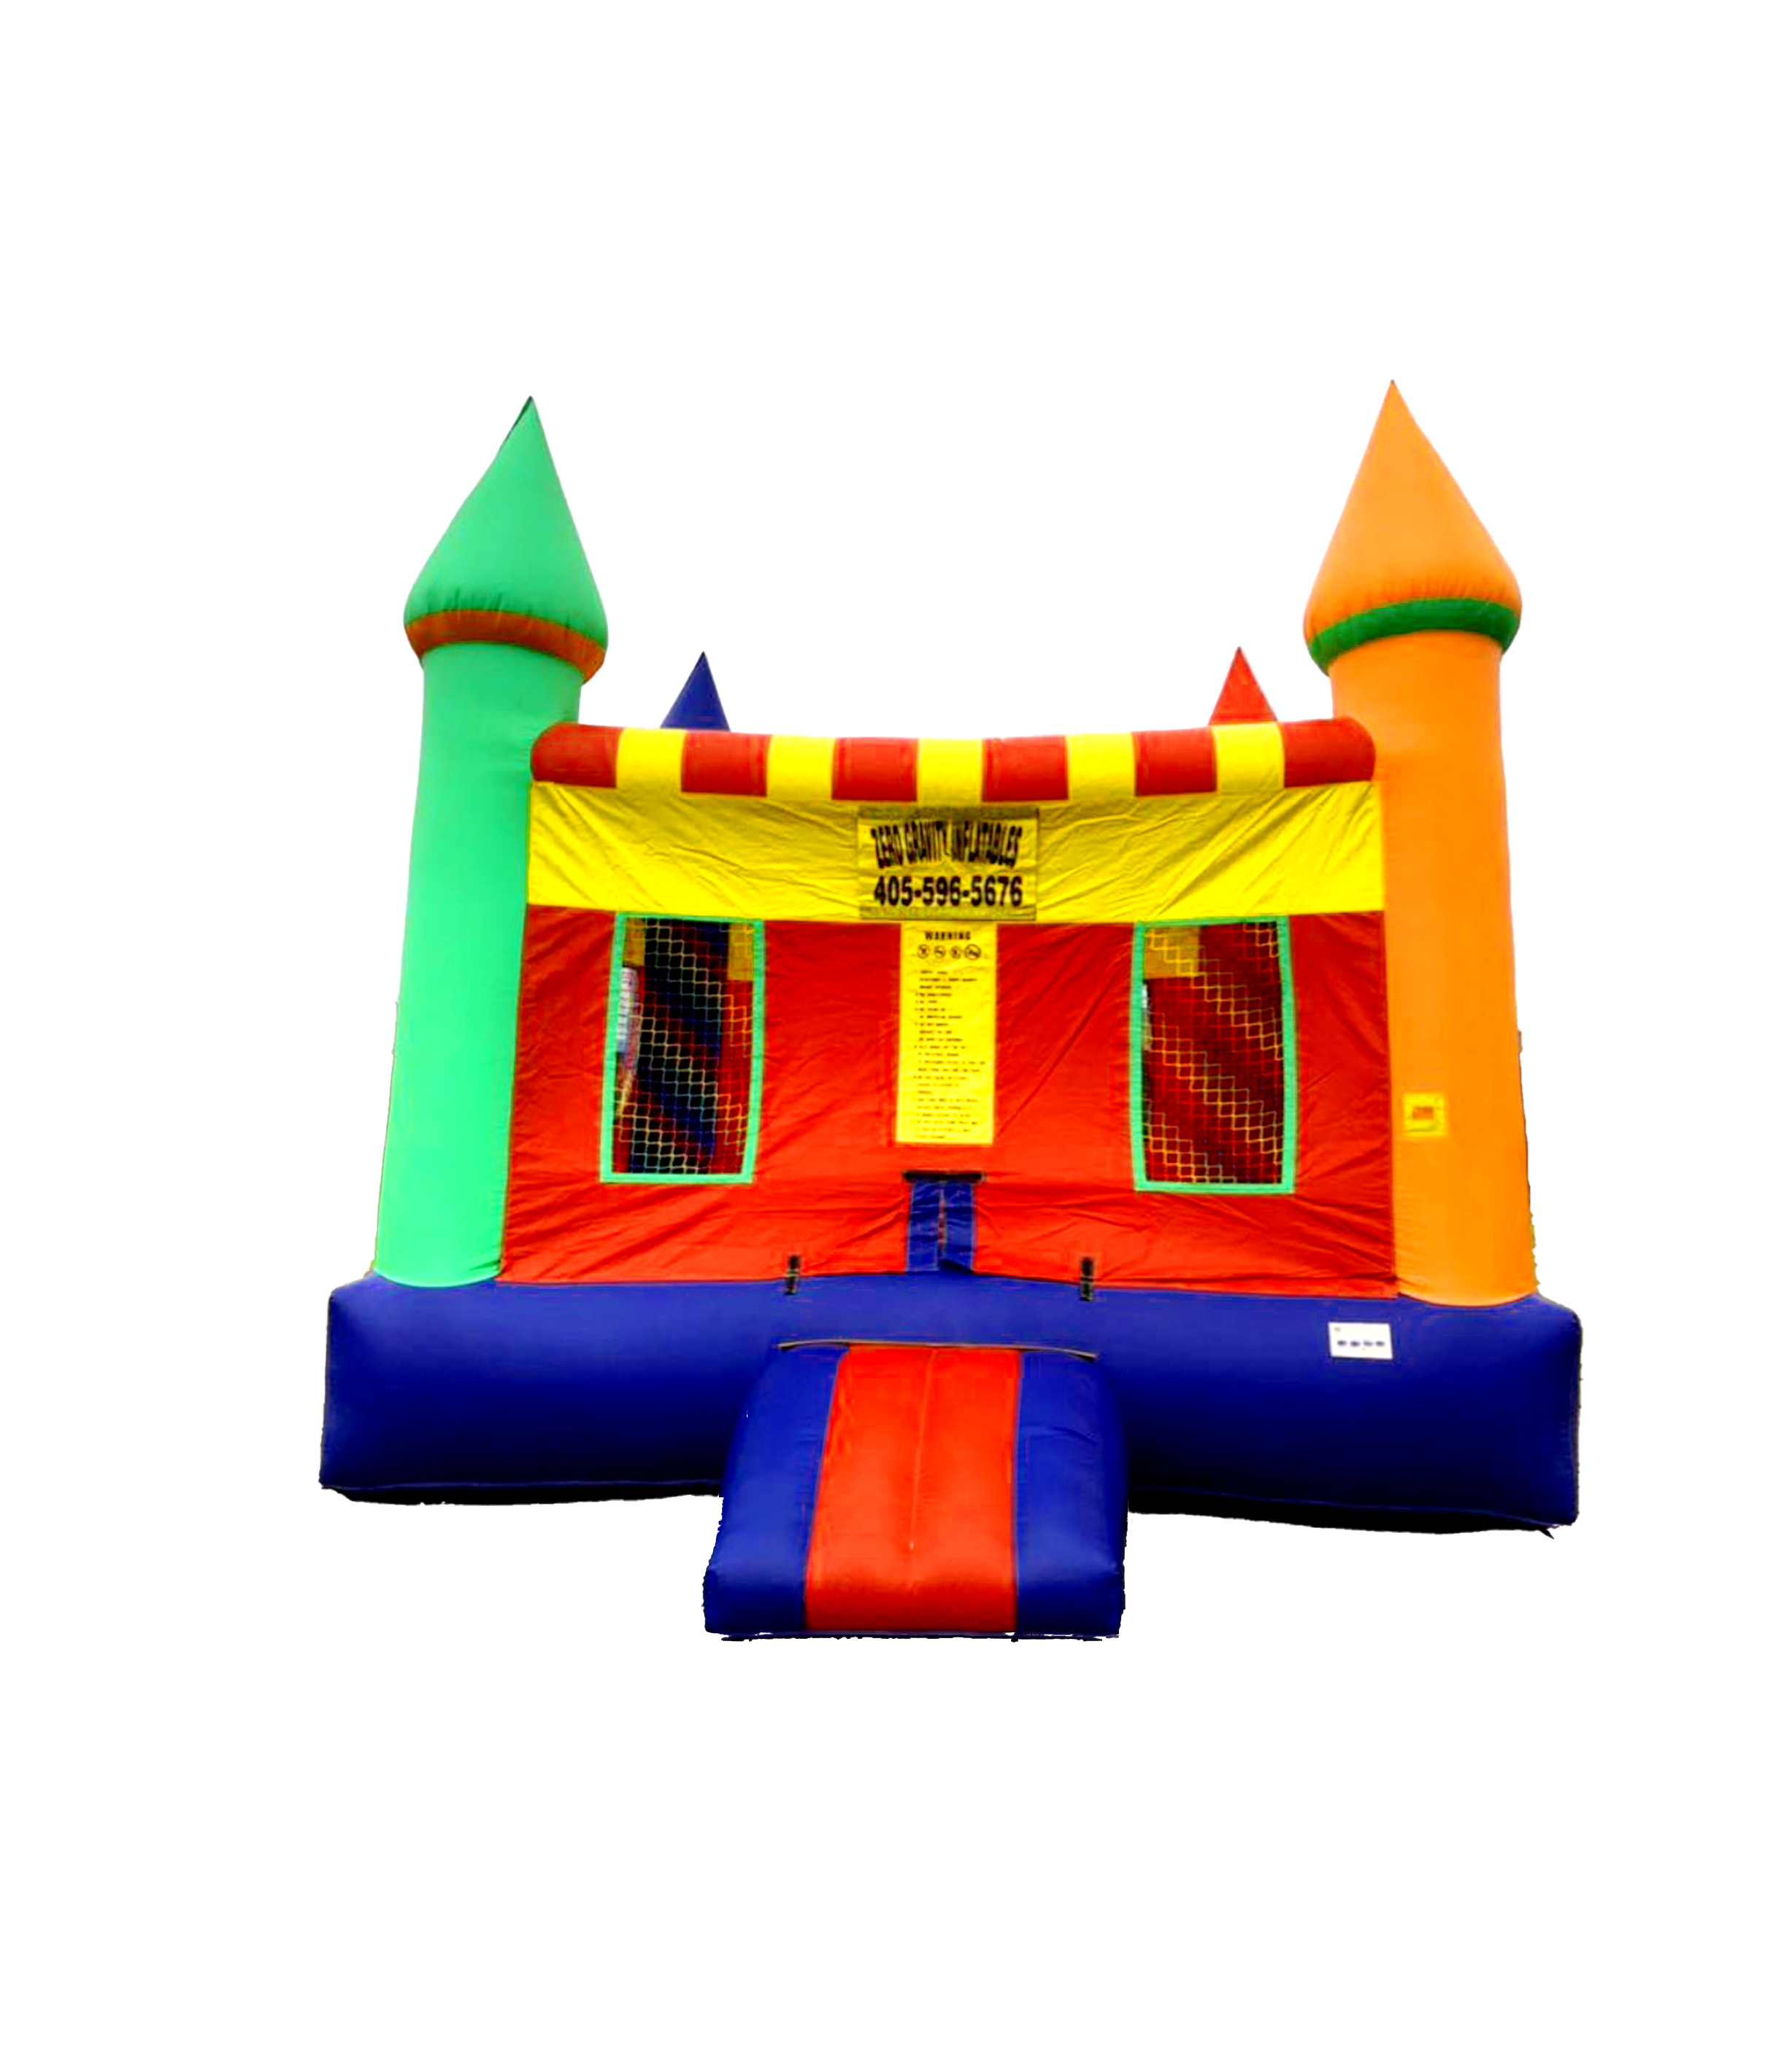 Bouncehouse Rental: Multicolored Castle